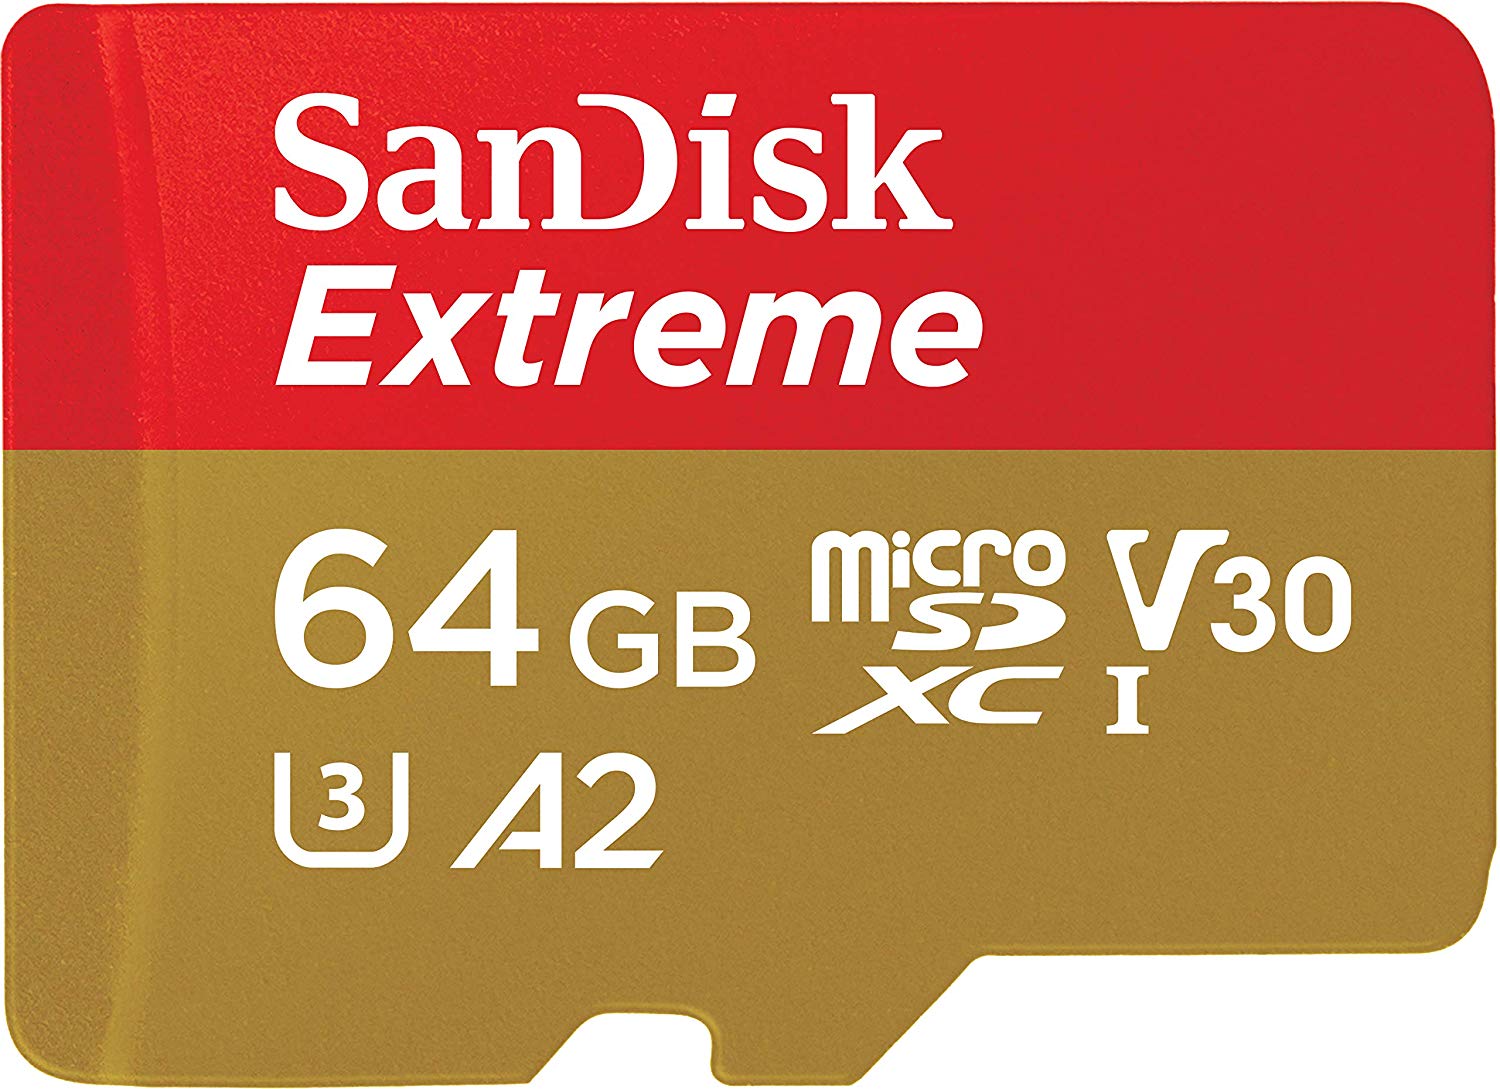 Tarjeta SanDisk Extreme 64GB 160 MB/s solo 14,9€